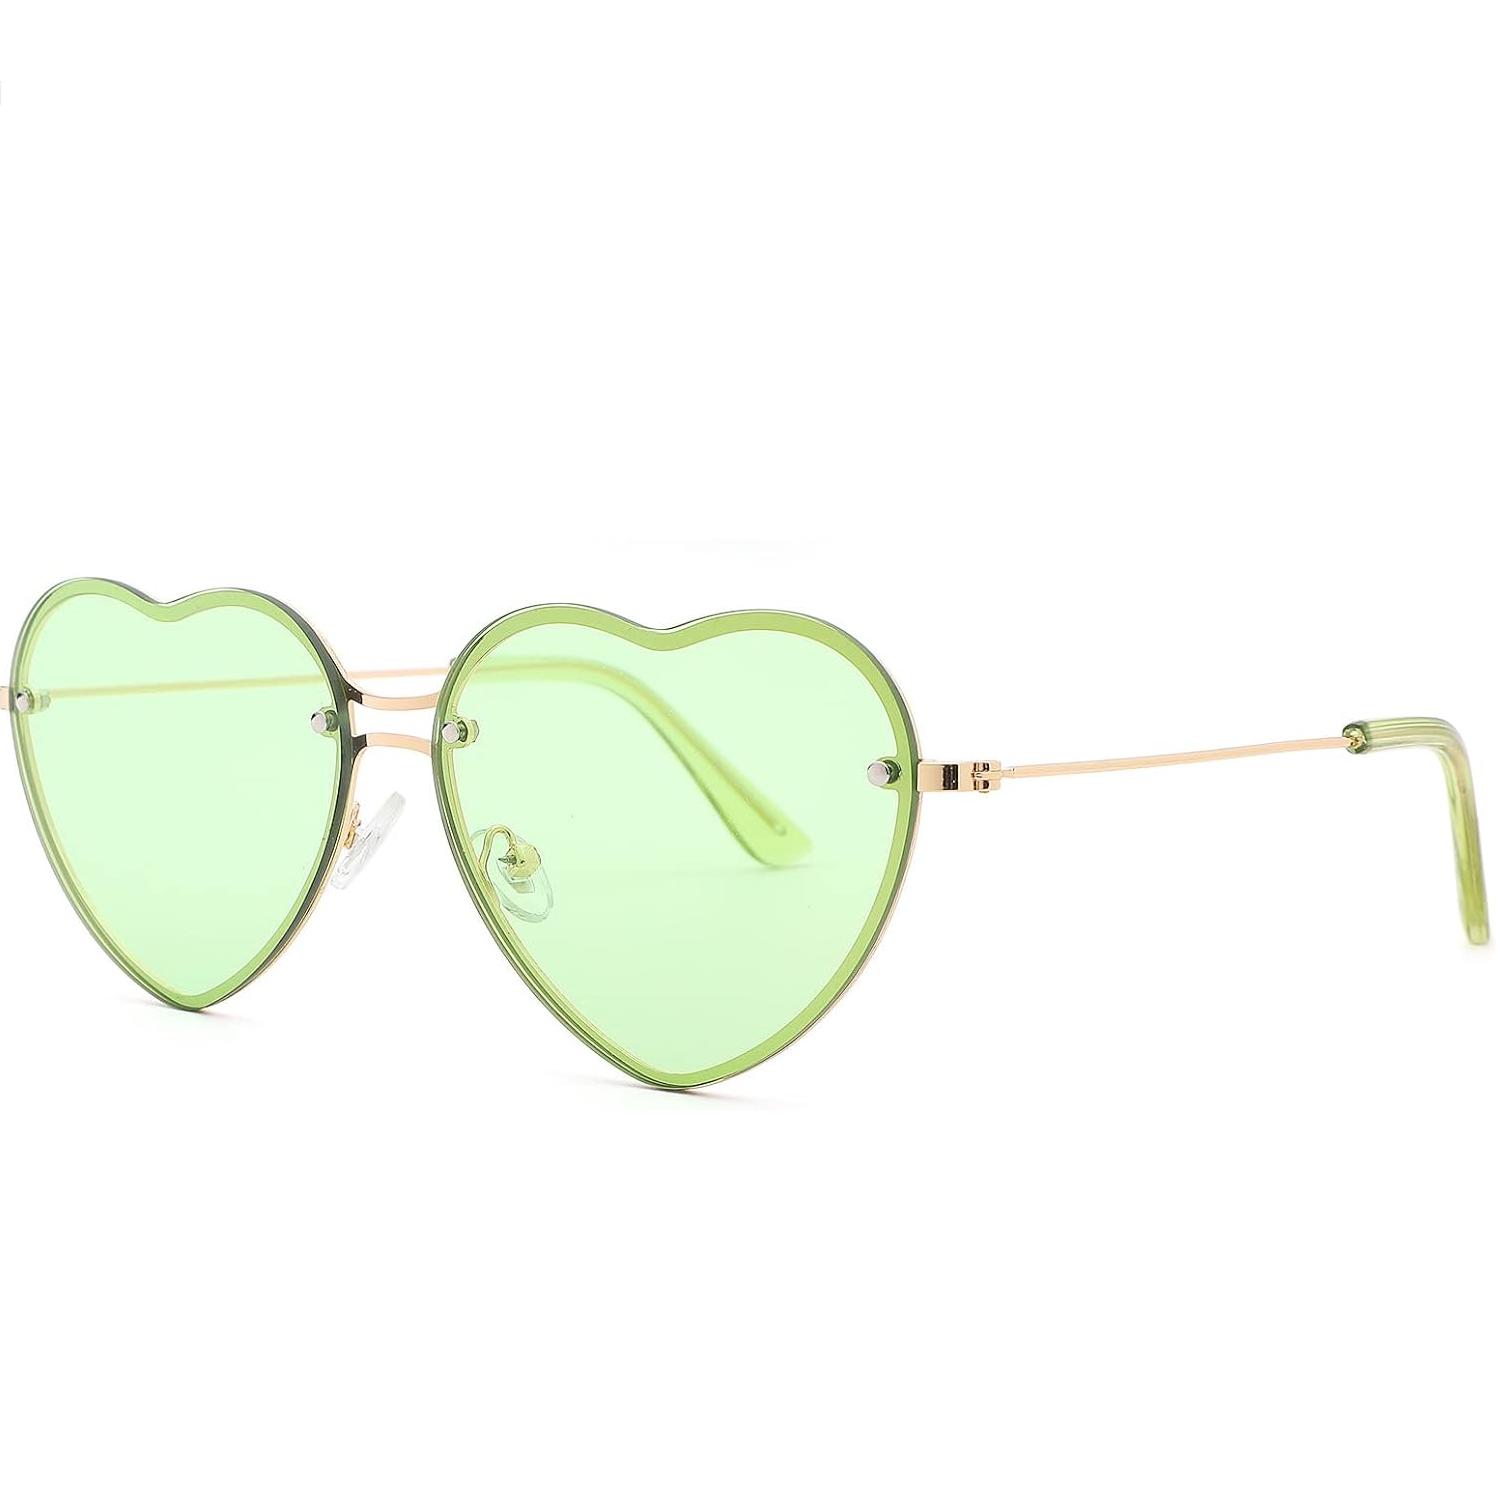 Chic Love Heart Rimless Sunglasses for Women